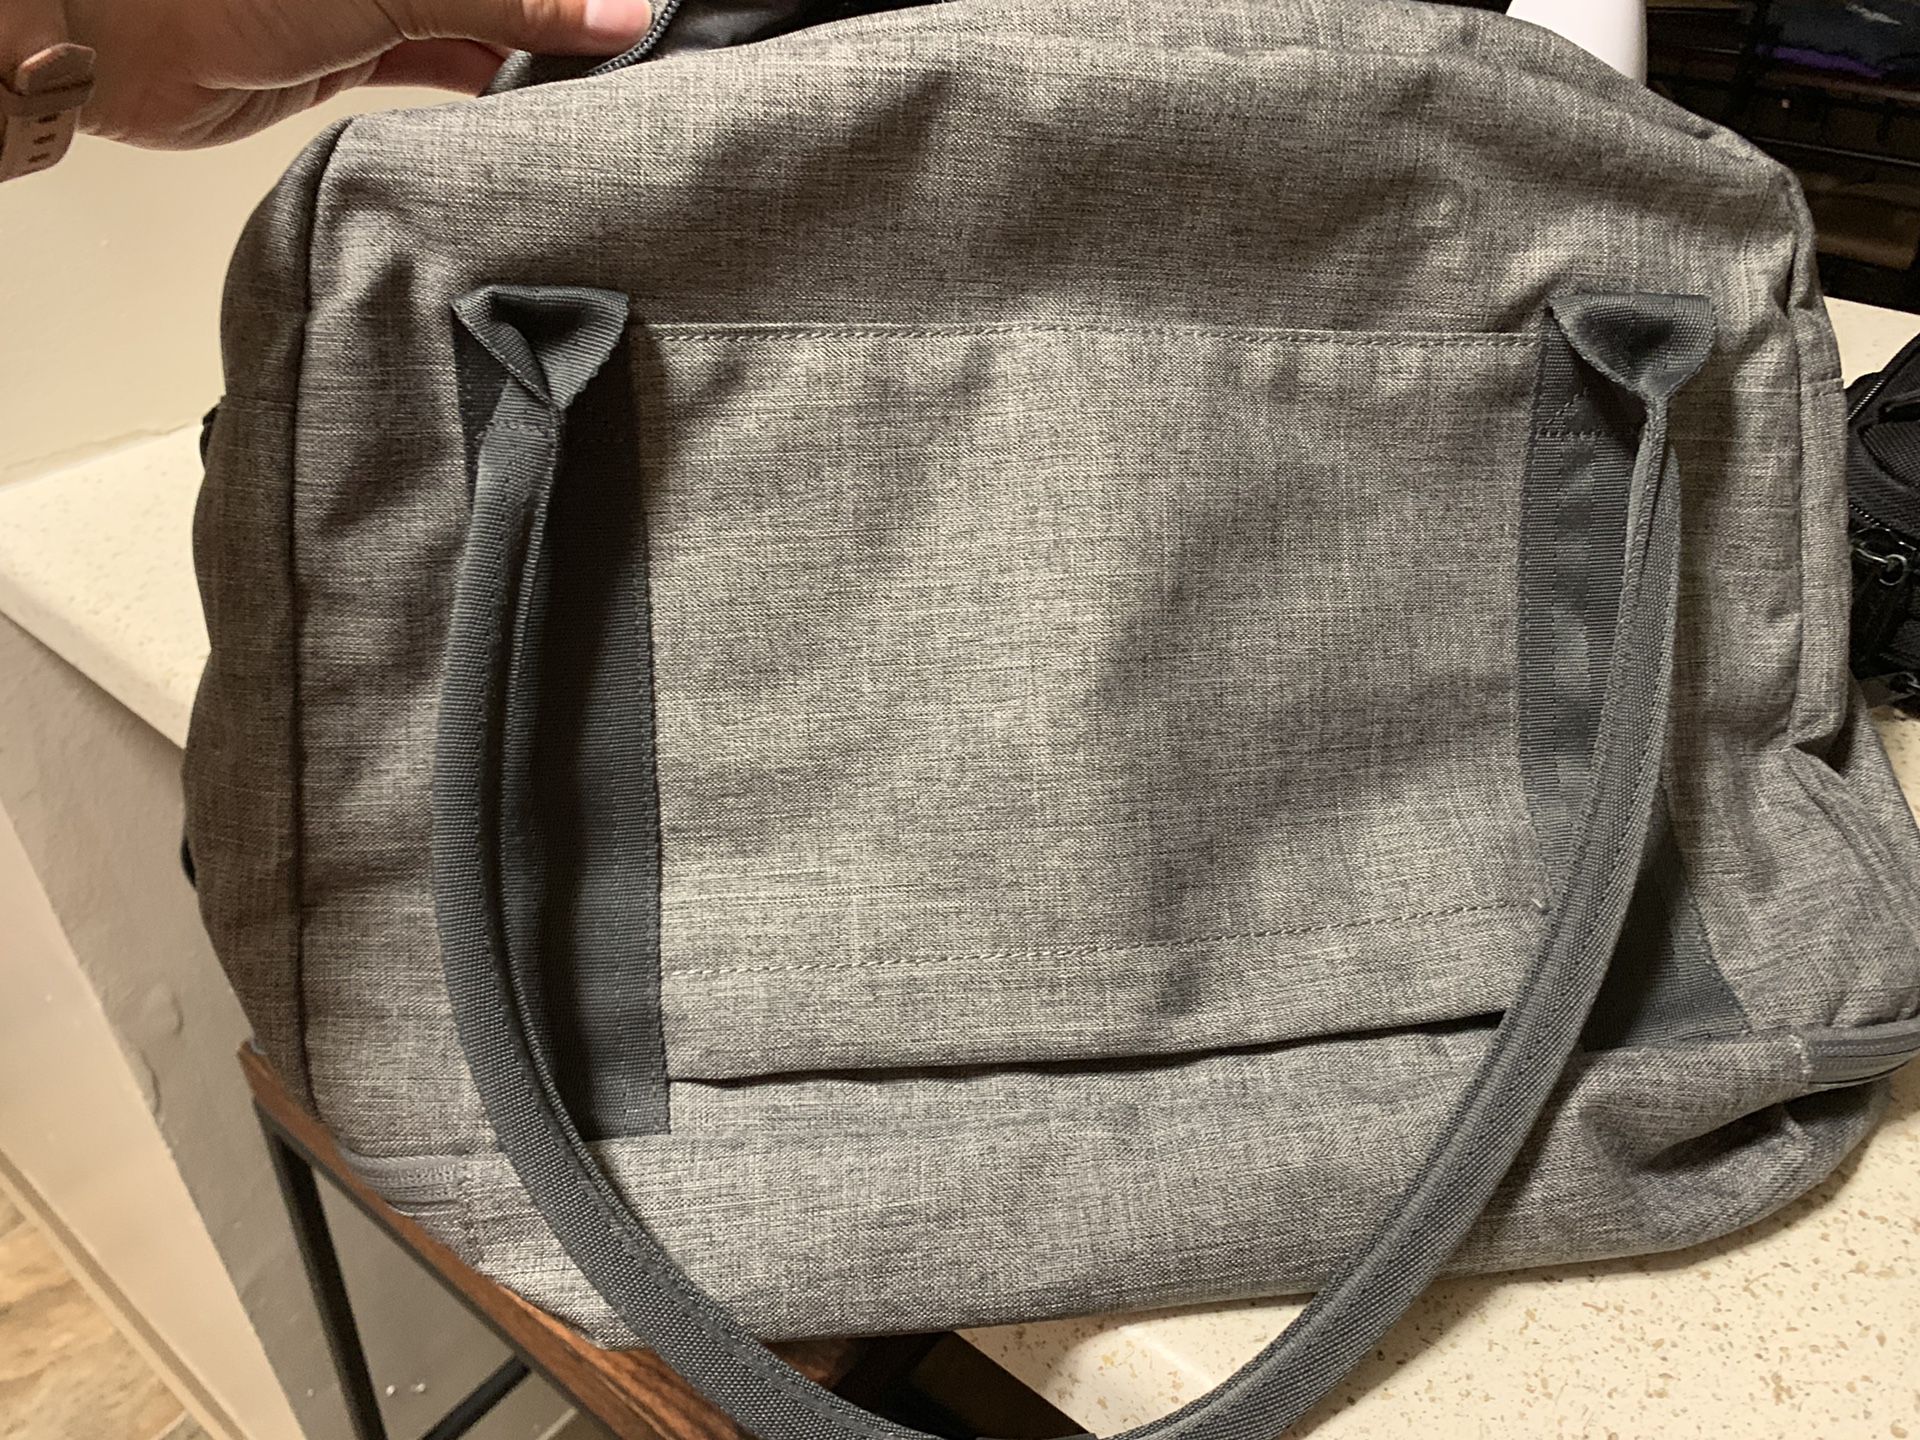 Duffel bag (Target Made By Design)